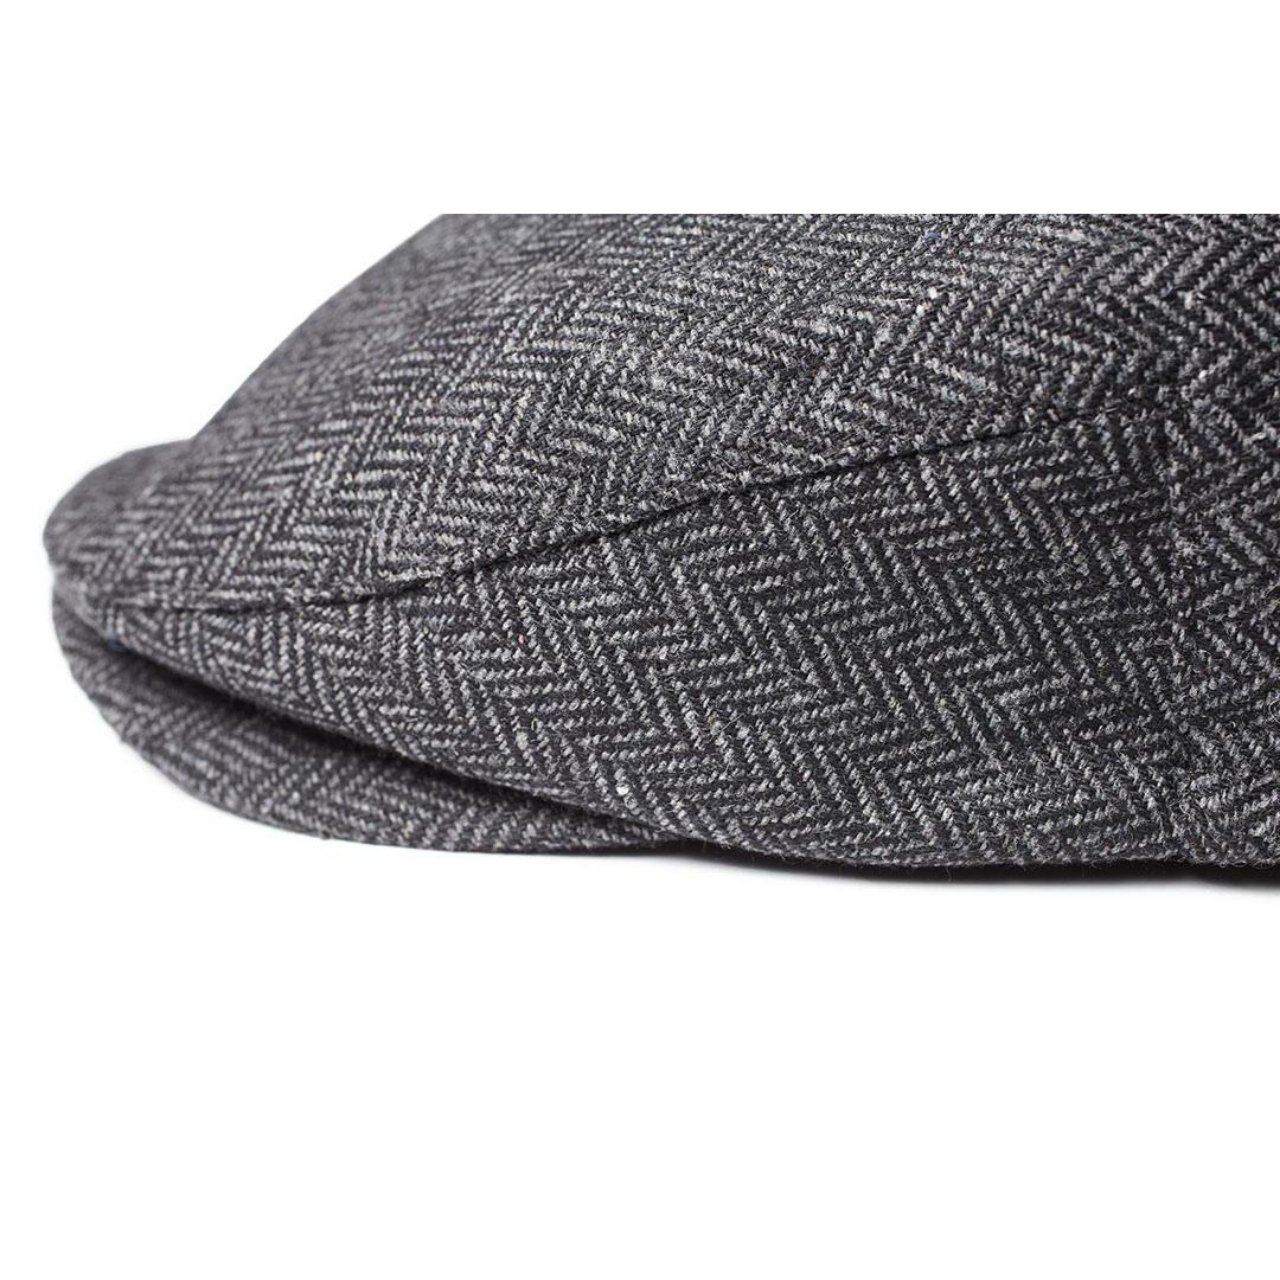 Brixton - HOOLIGAN SNAP CAP - Grey Black Herringbone